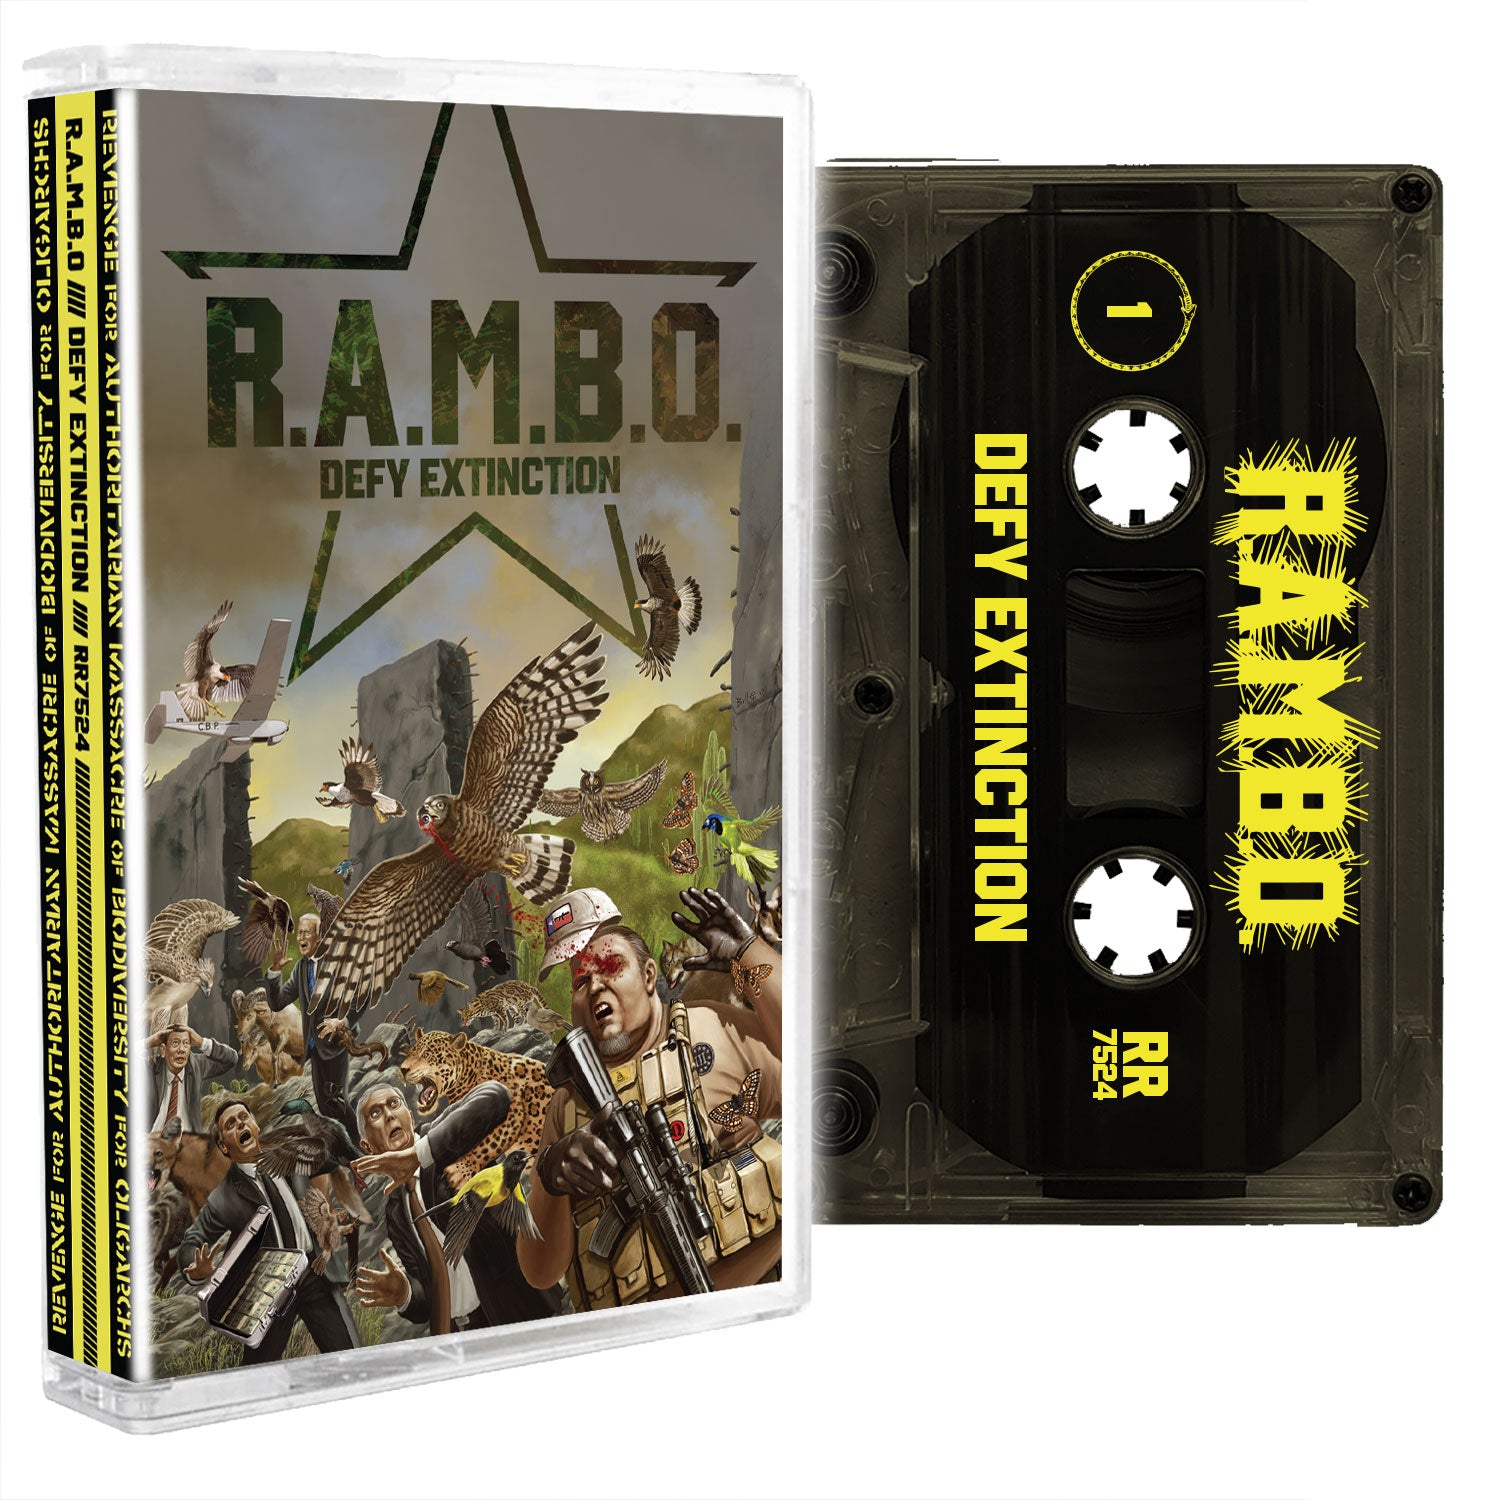 R.A.M.B.O. "Defy Extinction" Cassette